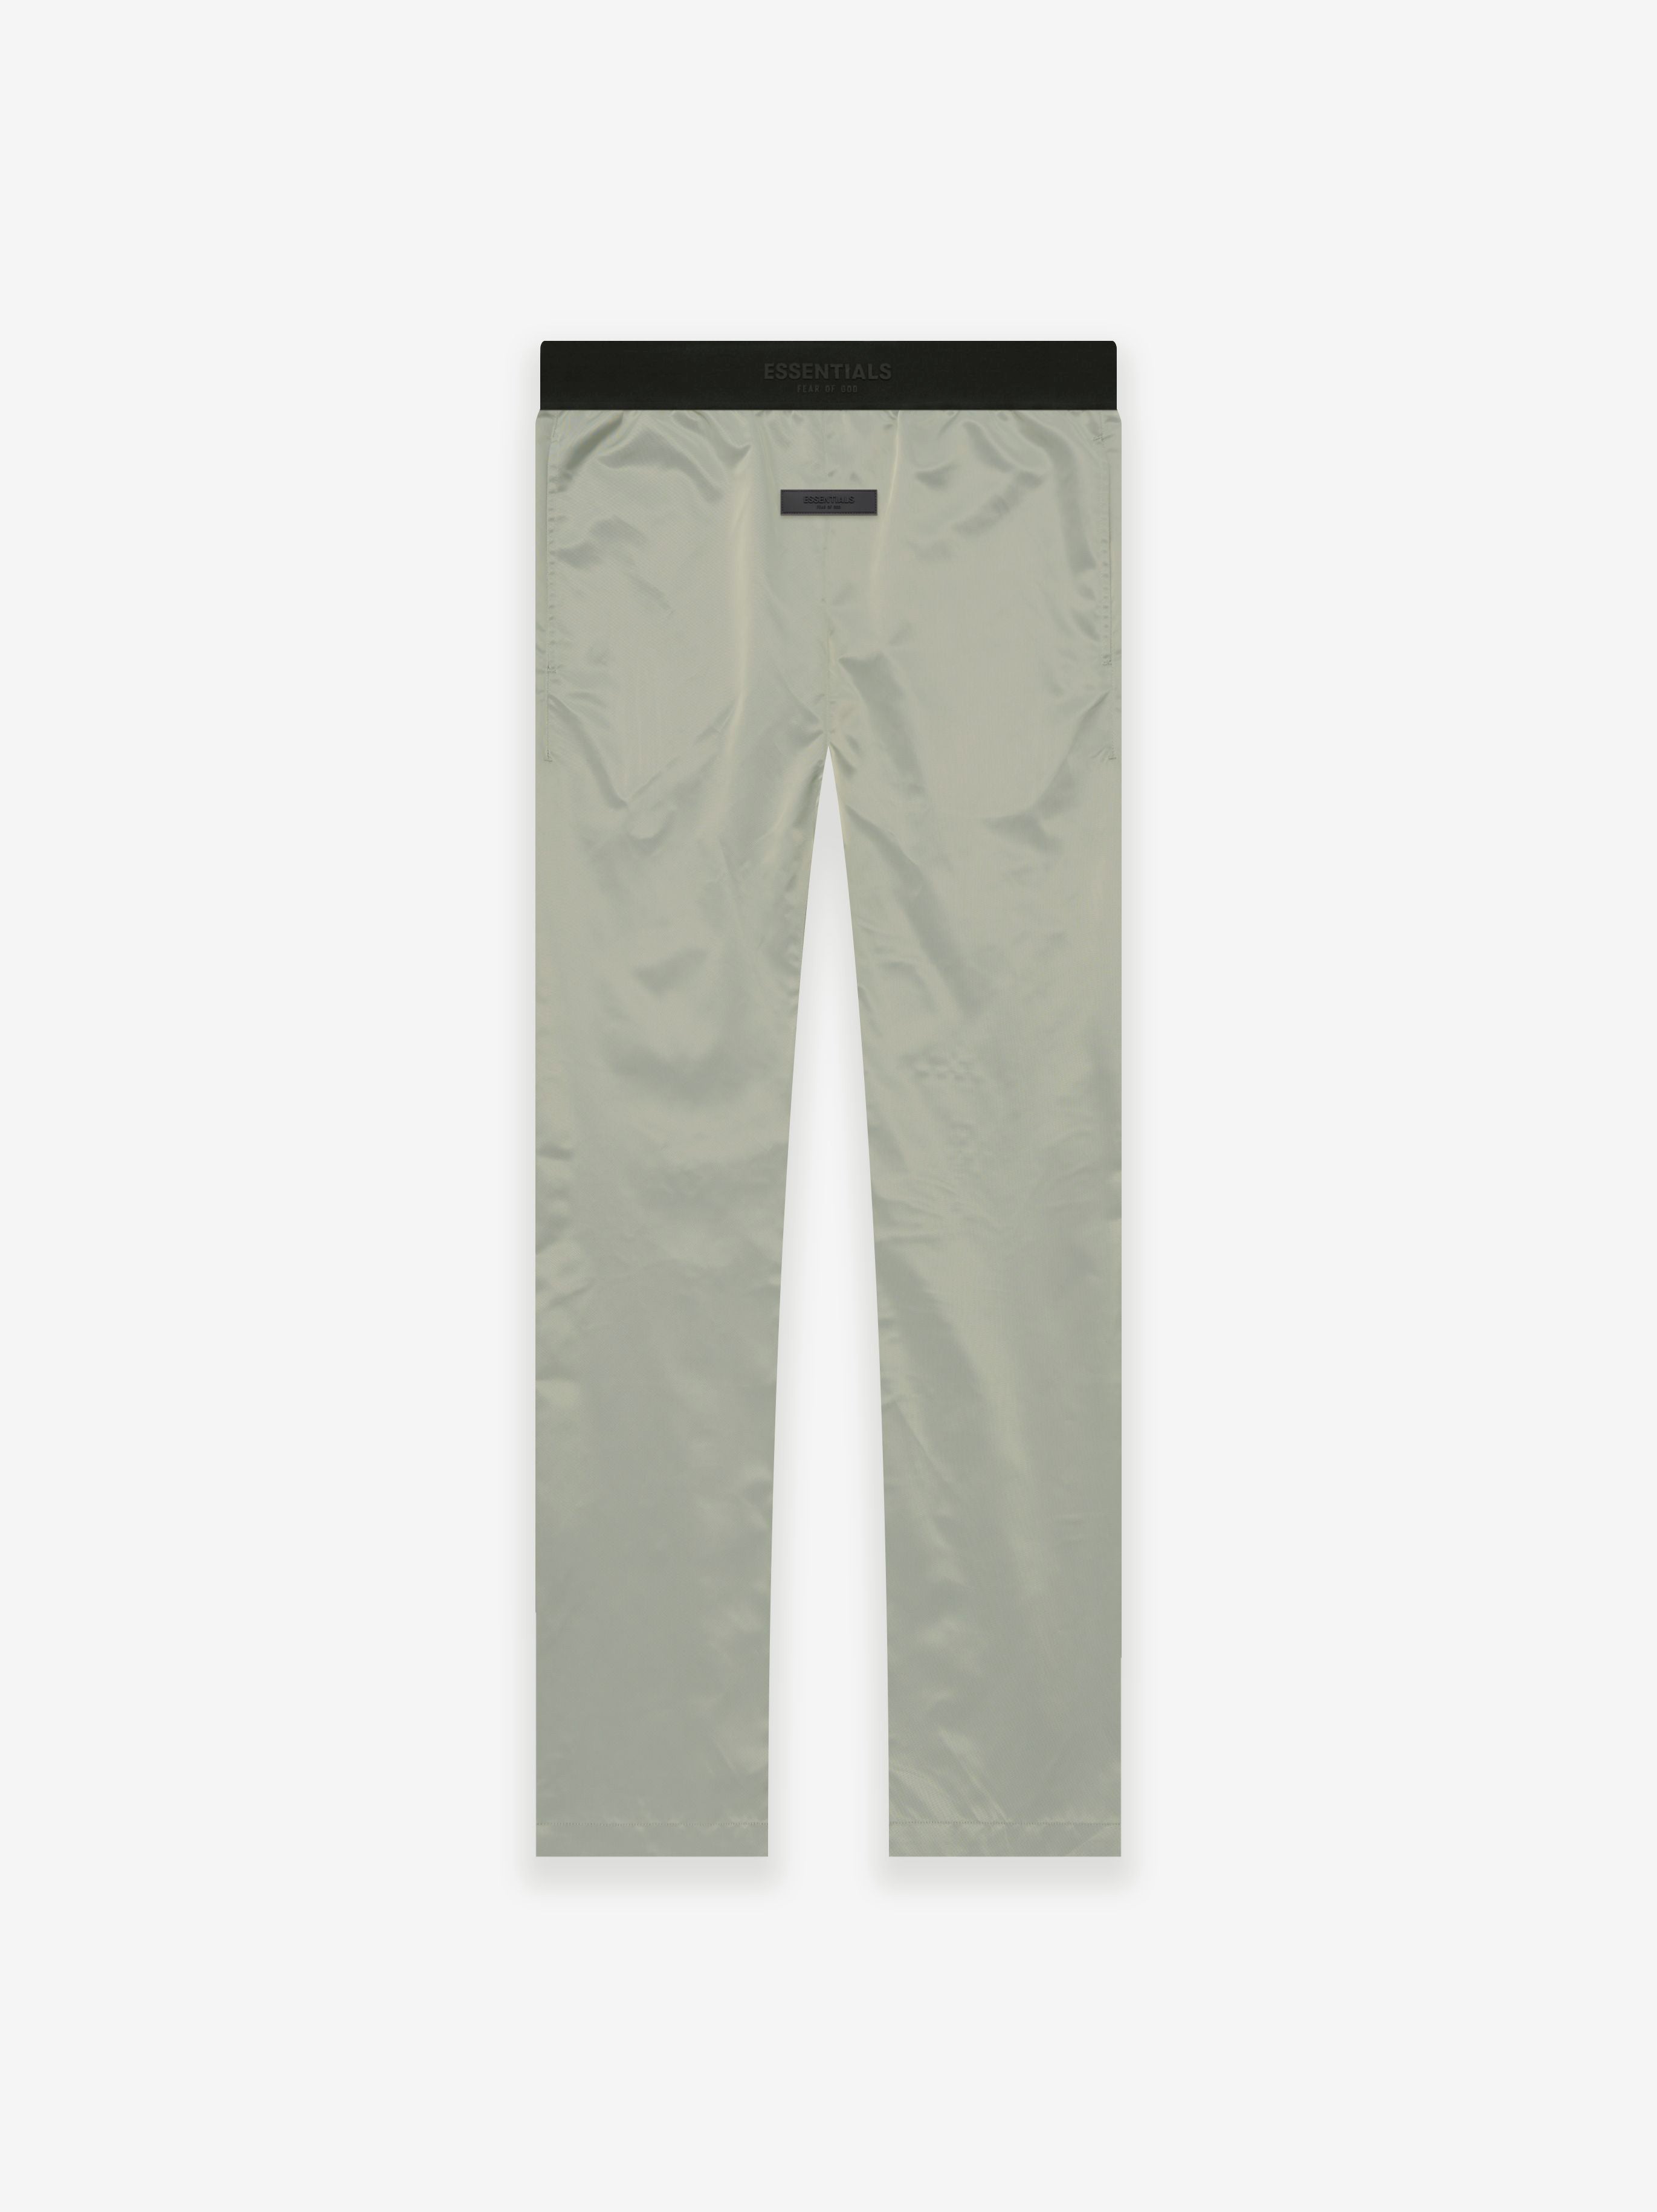 BlackサイズFOG Essentials trouser pants